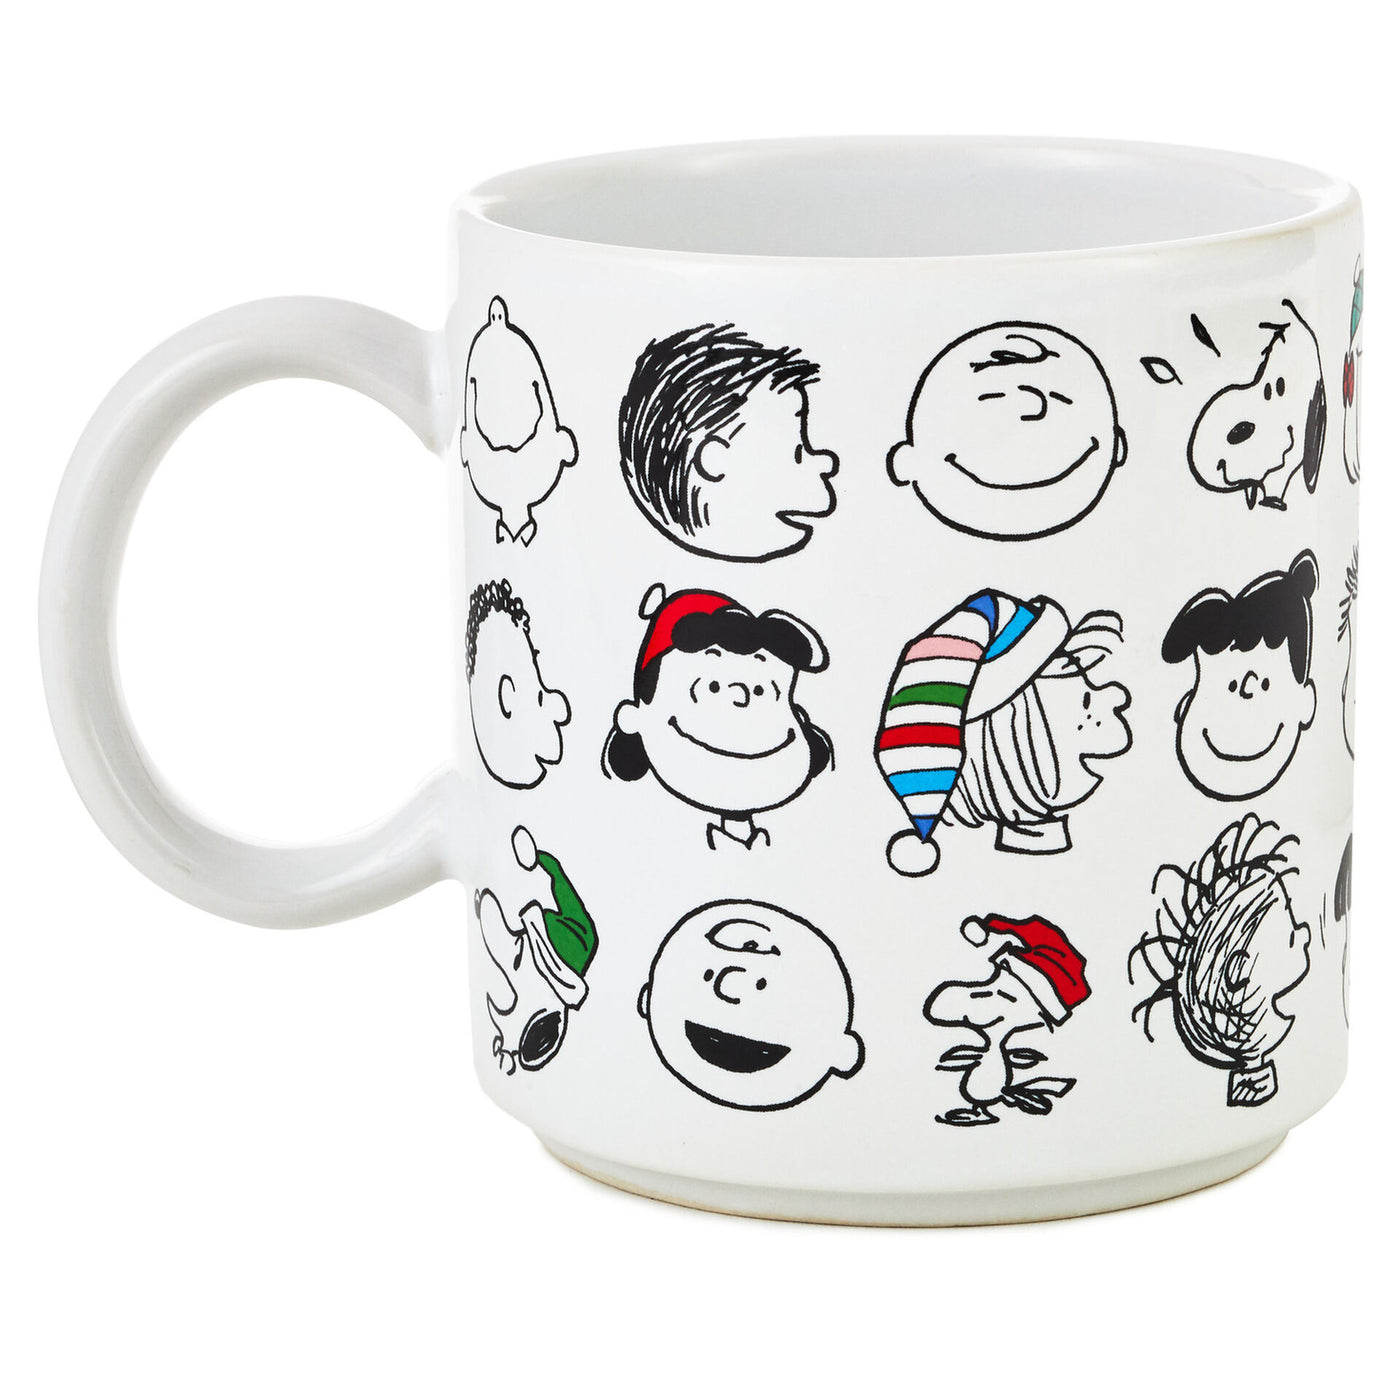 Hallmark Peanuts So Merry Together Ceramic Mug 13.5 oz New